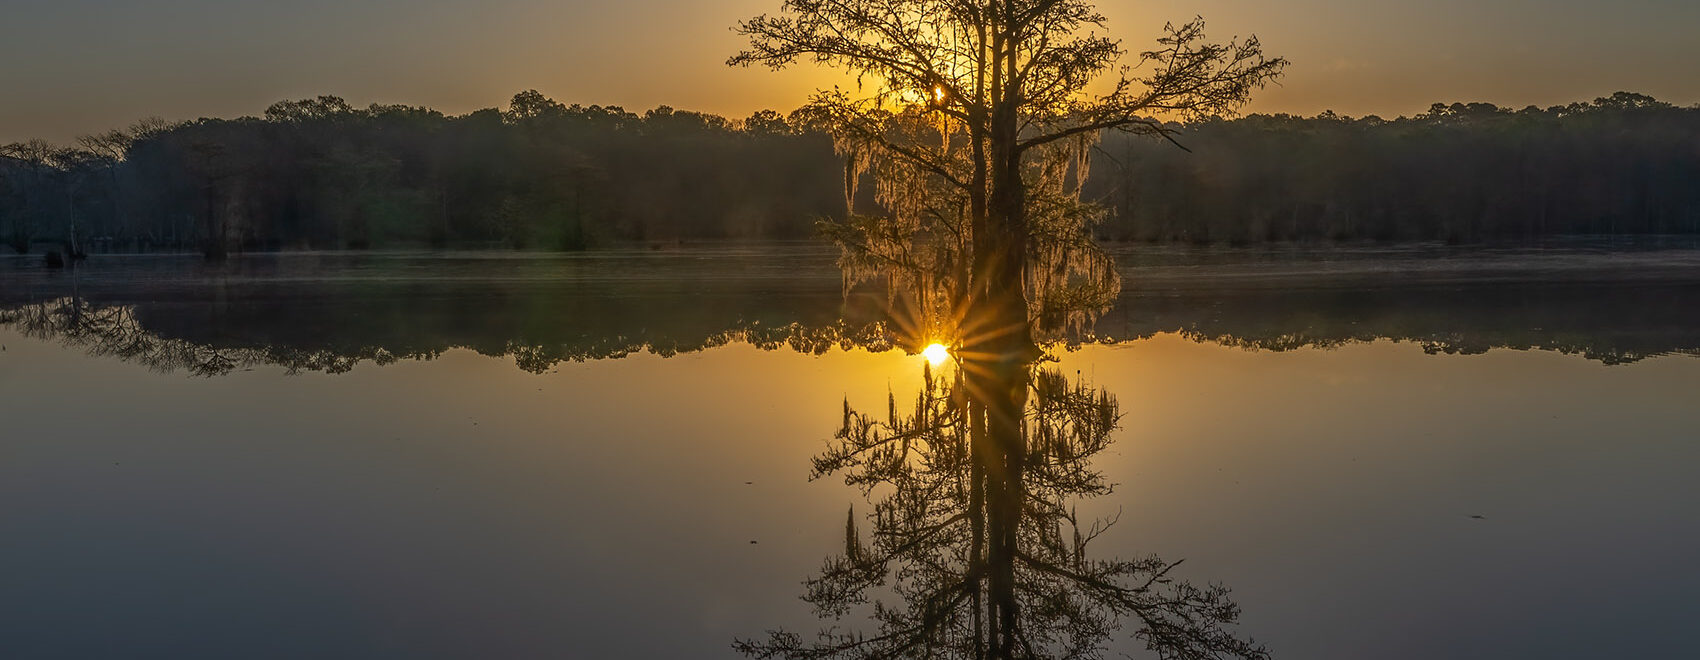 sunrise behind cypress tree sun reflection in lake